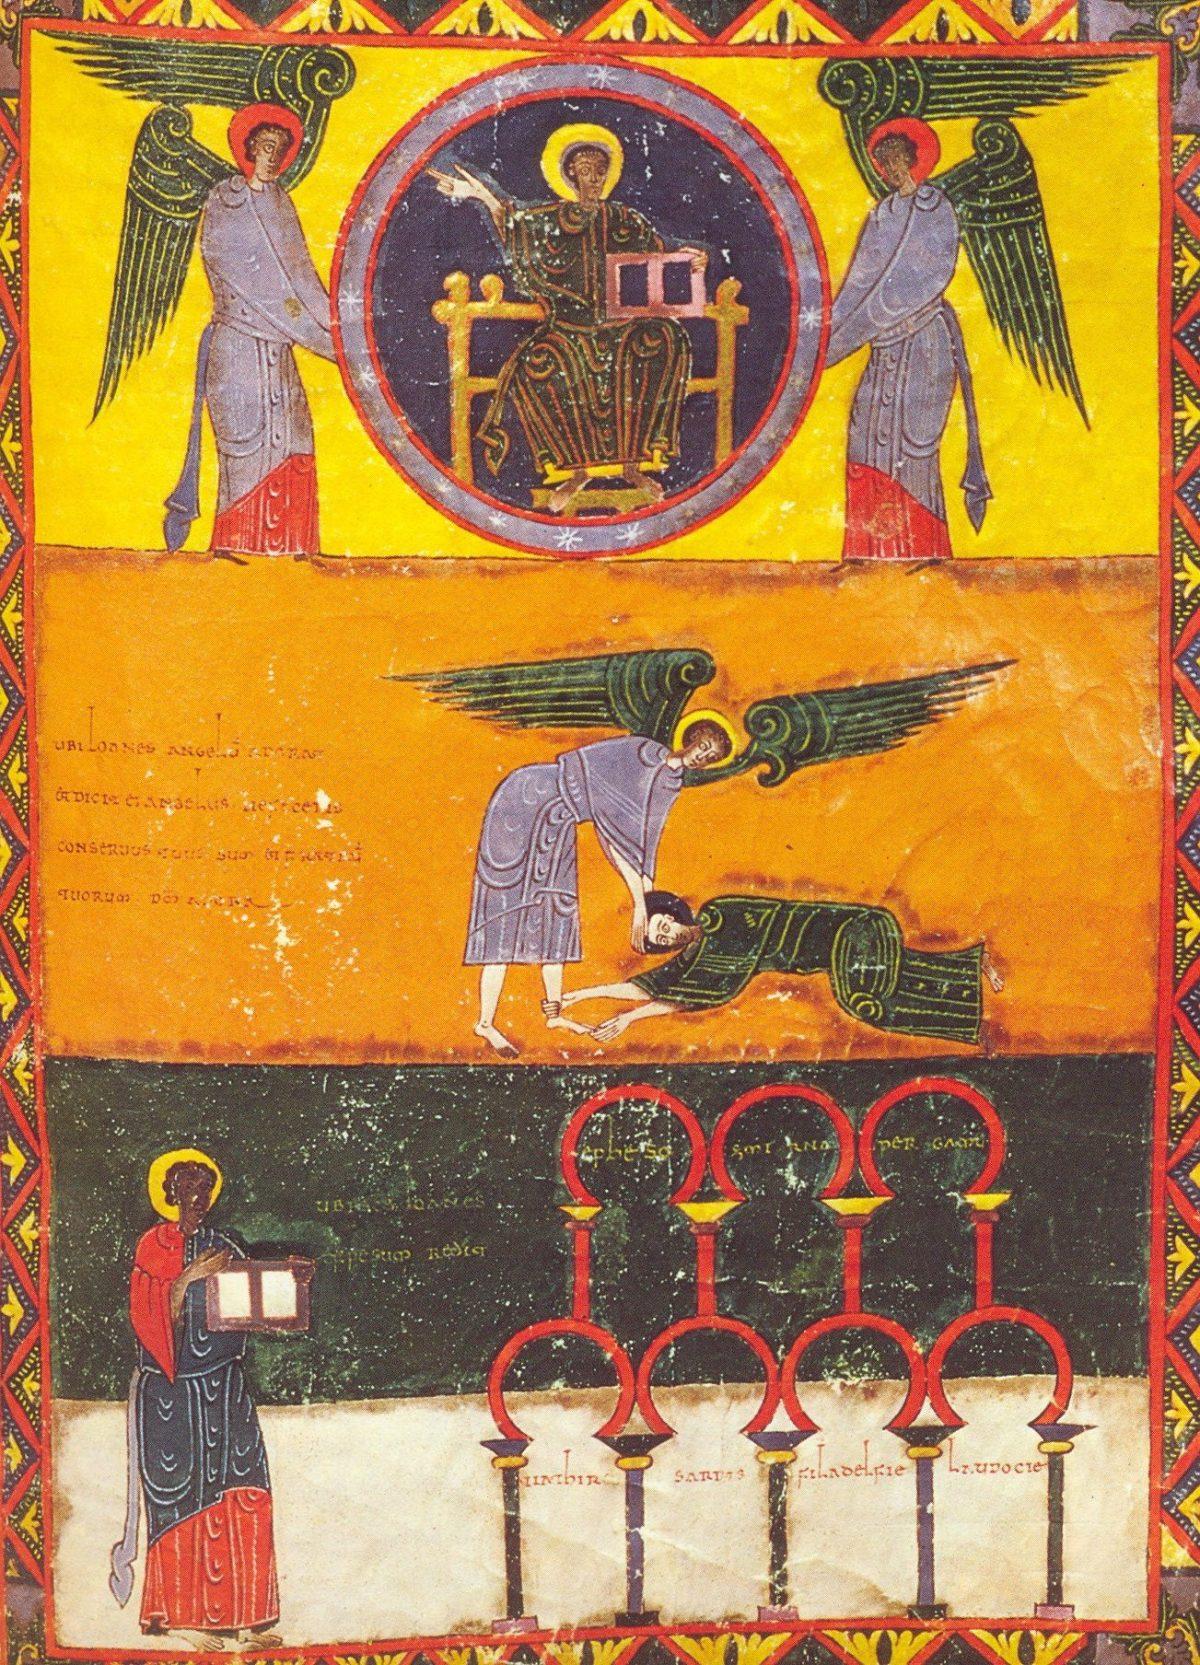 Beatus de Facundus : Un Vif Guide Illustré de l'Apocalypse (1047)